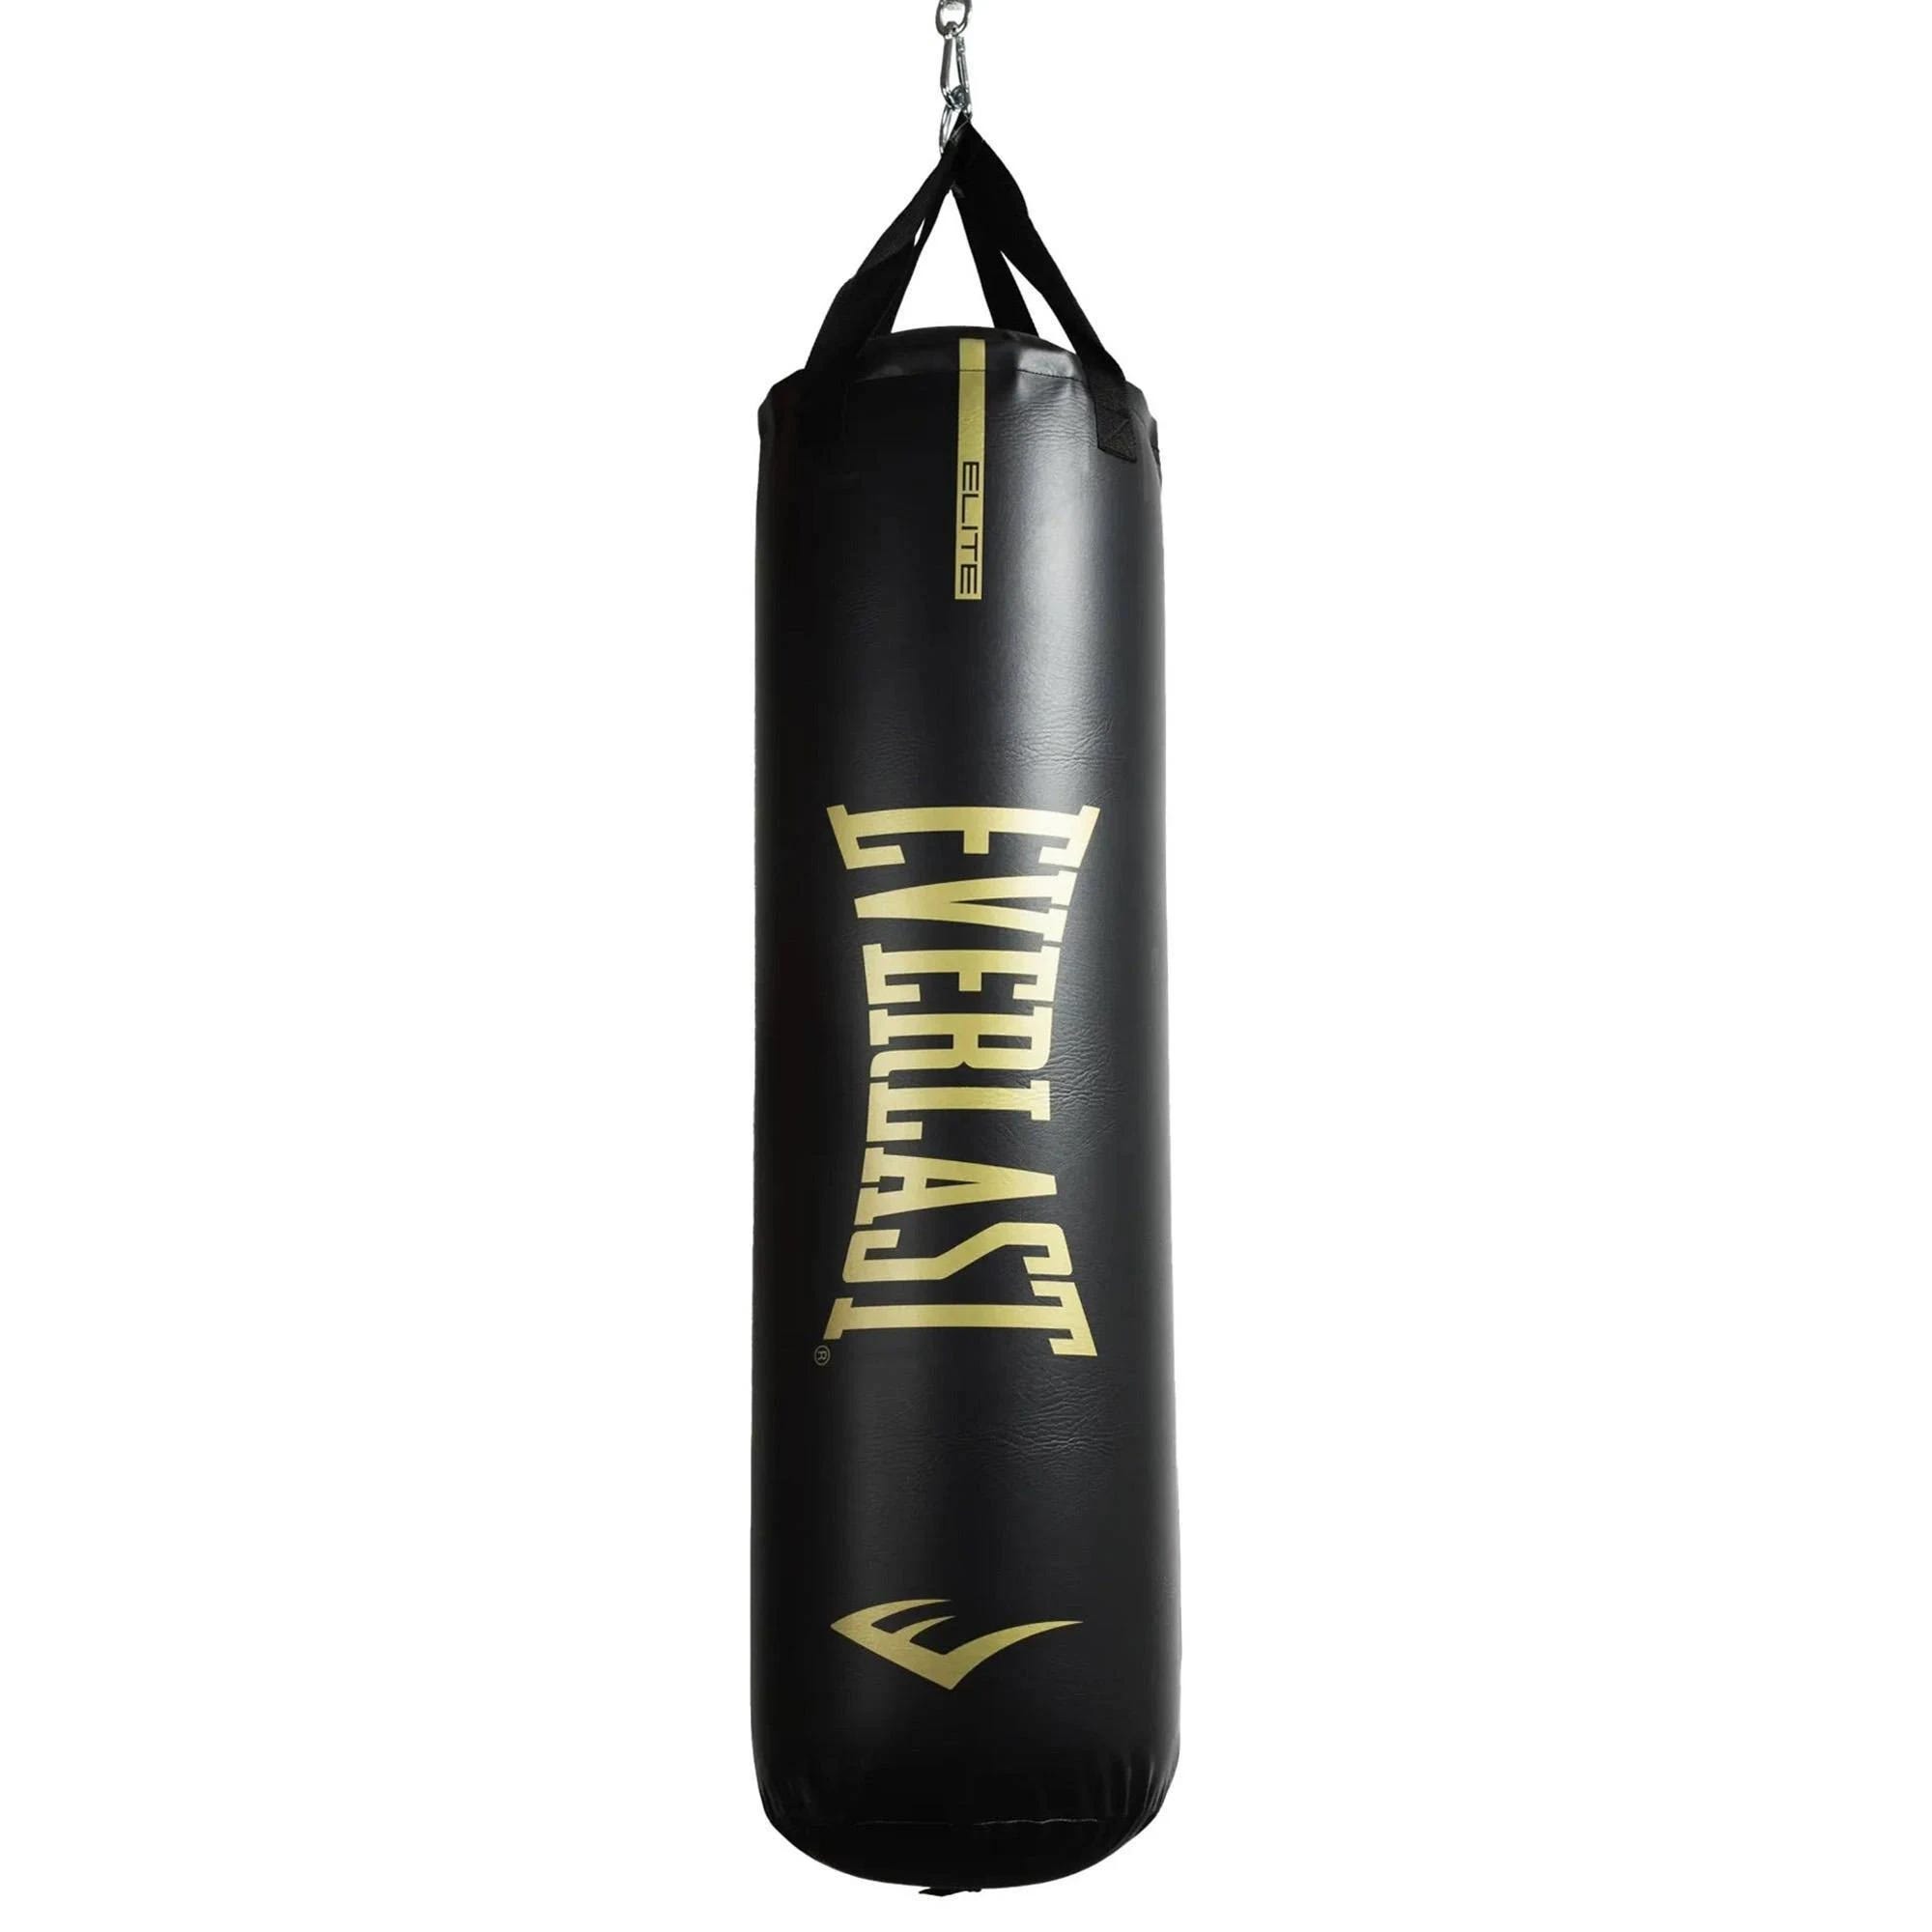 Durable, versatile Everlast Elite Nevatear Heavy Bag for intense workouts | Image